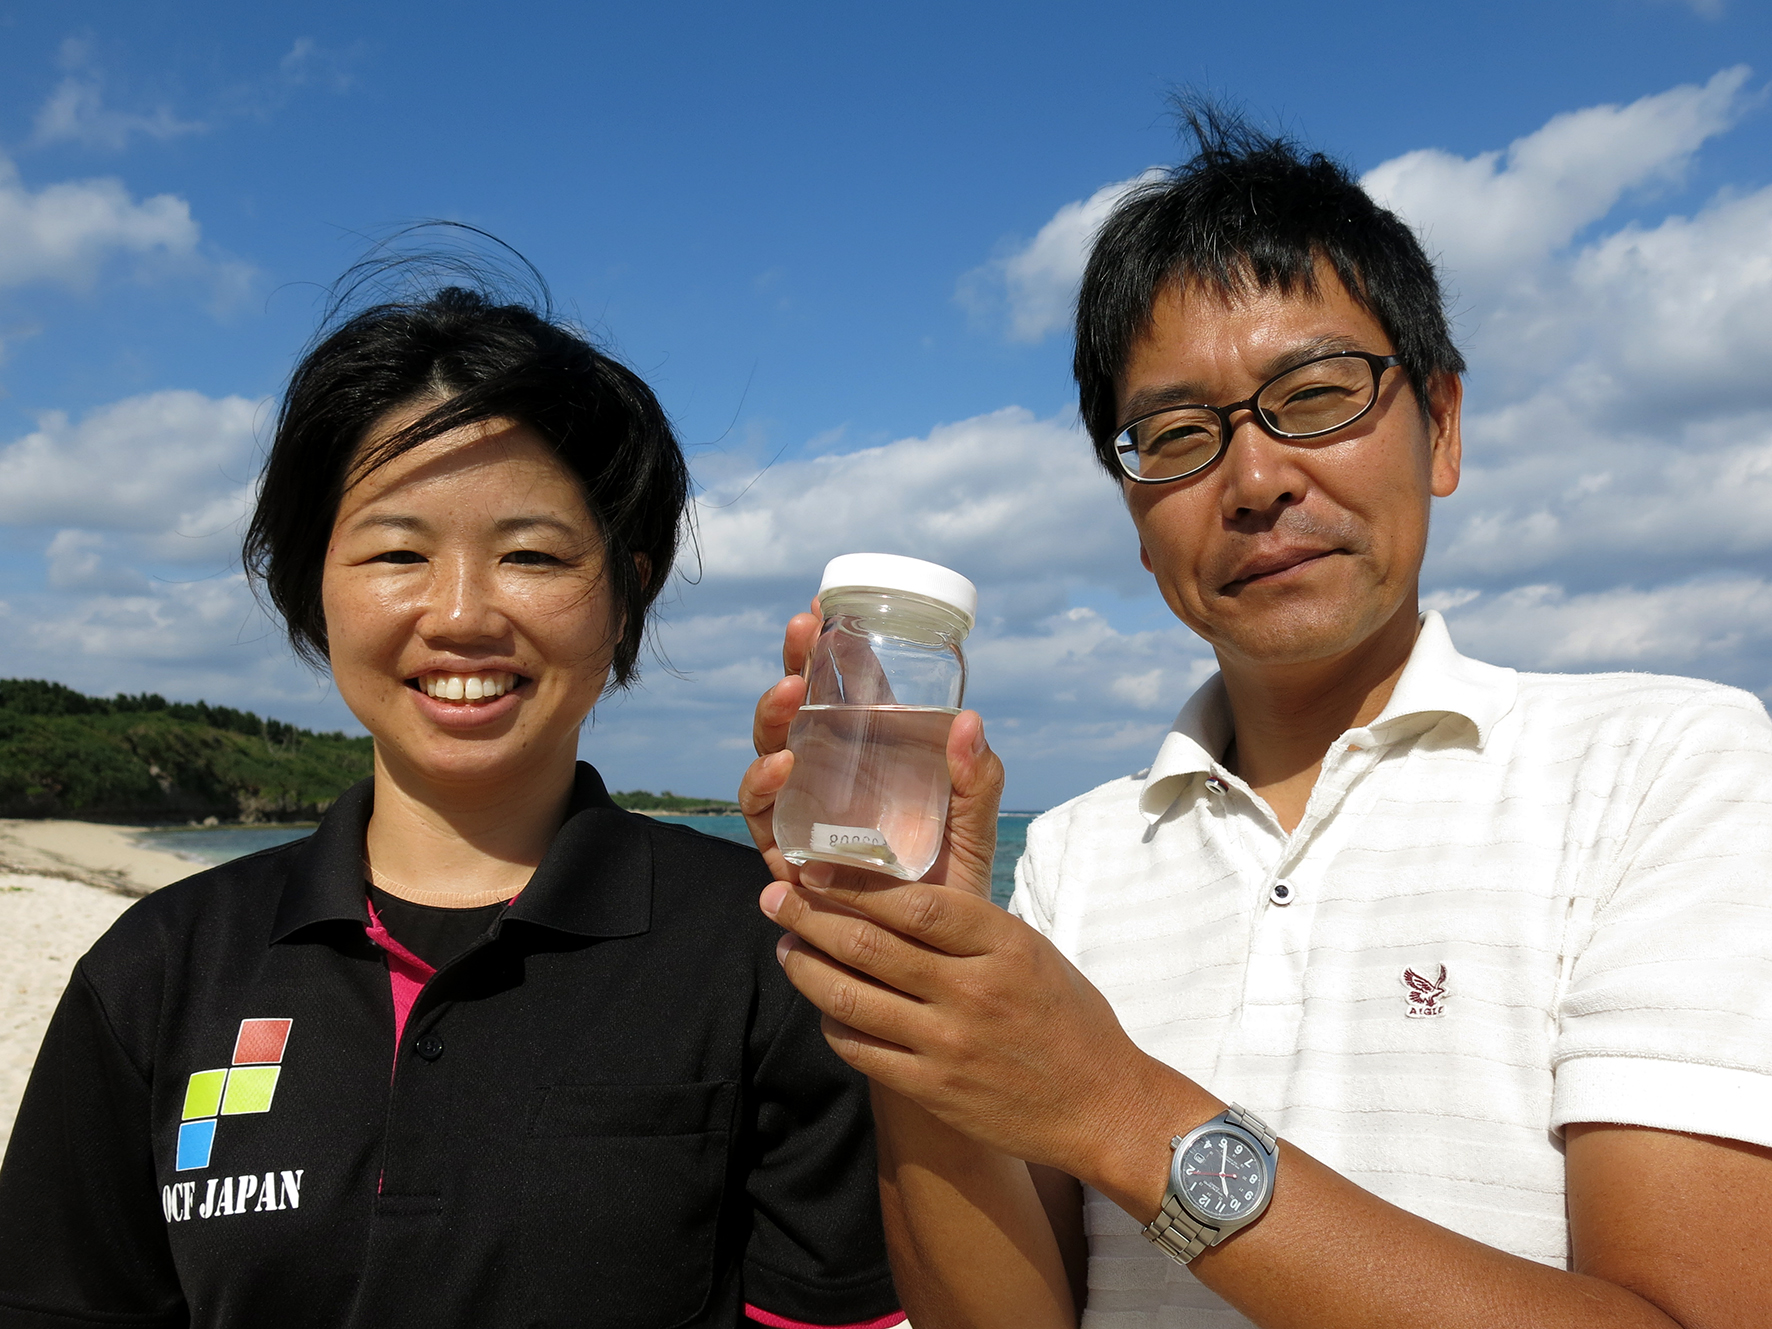 First Sighting Of Larsonella Pumilus Fish In Japan